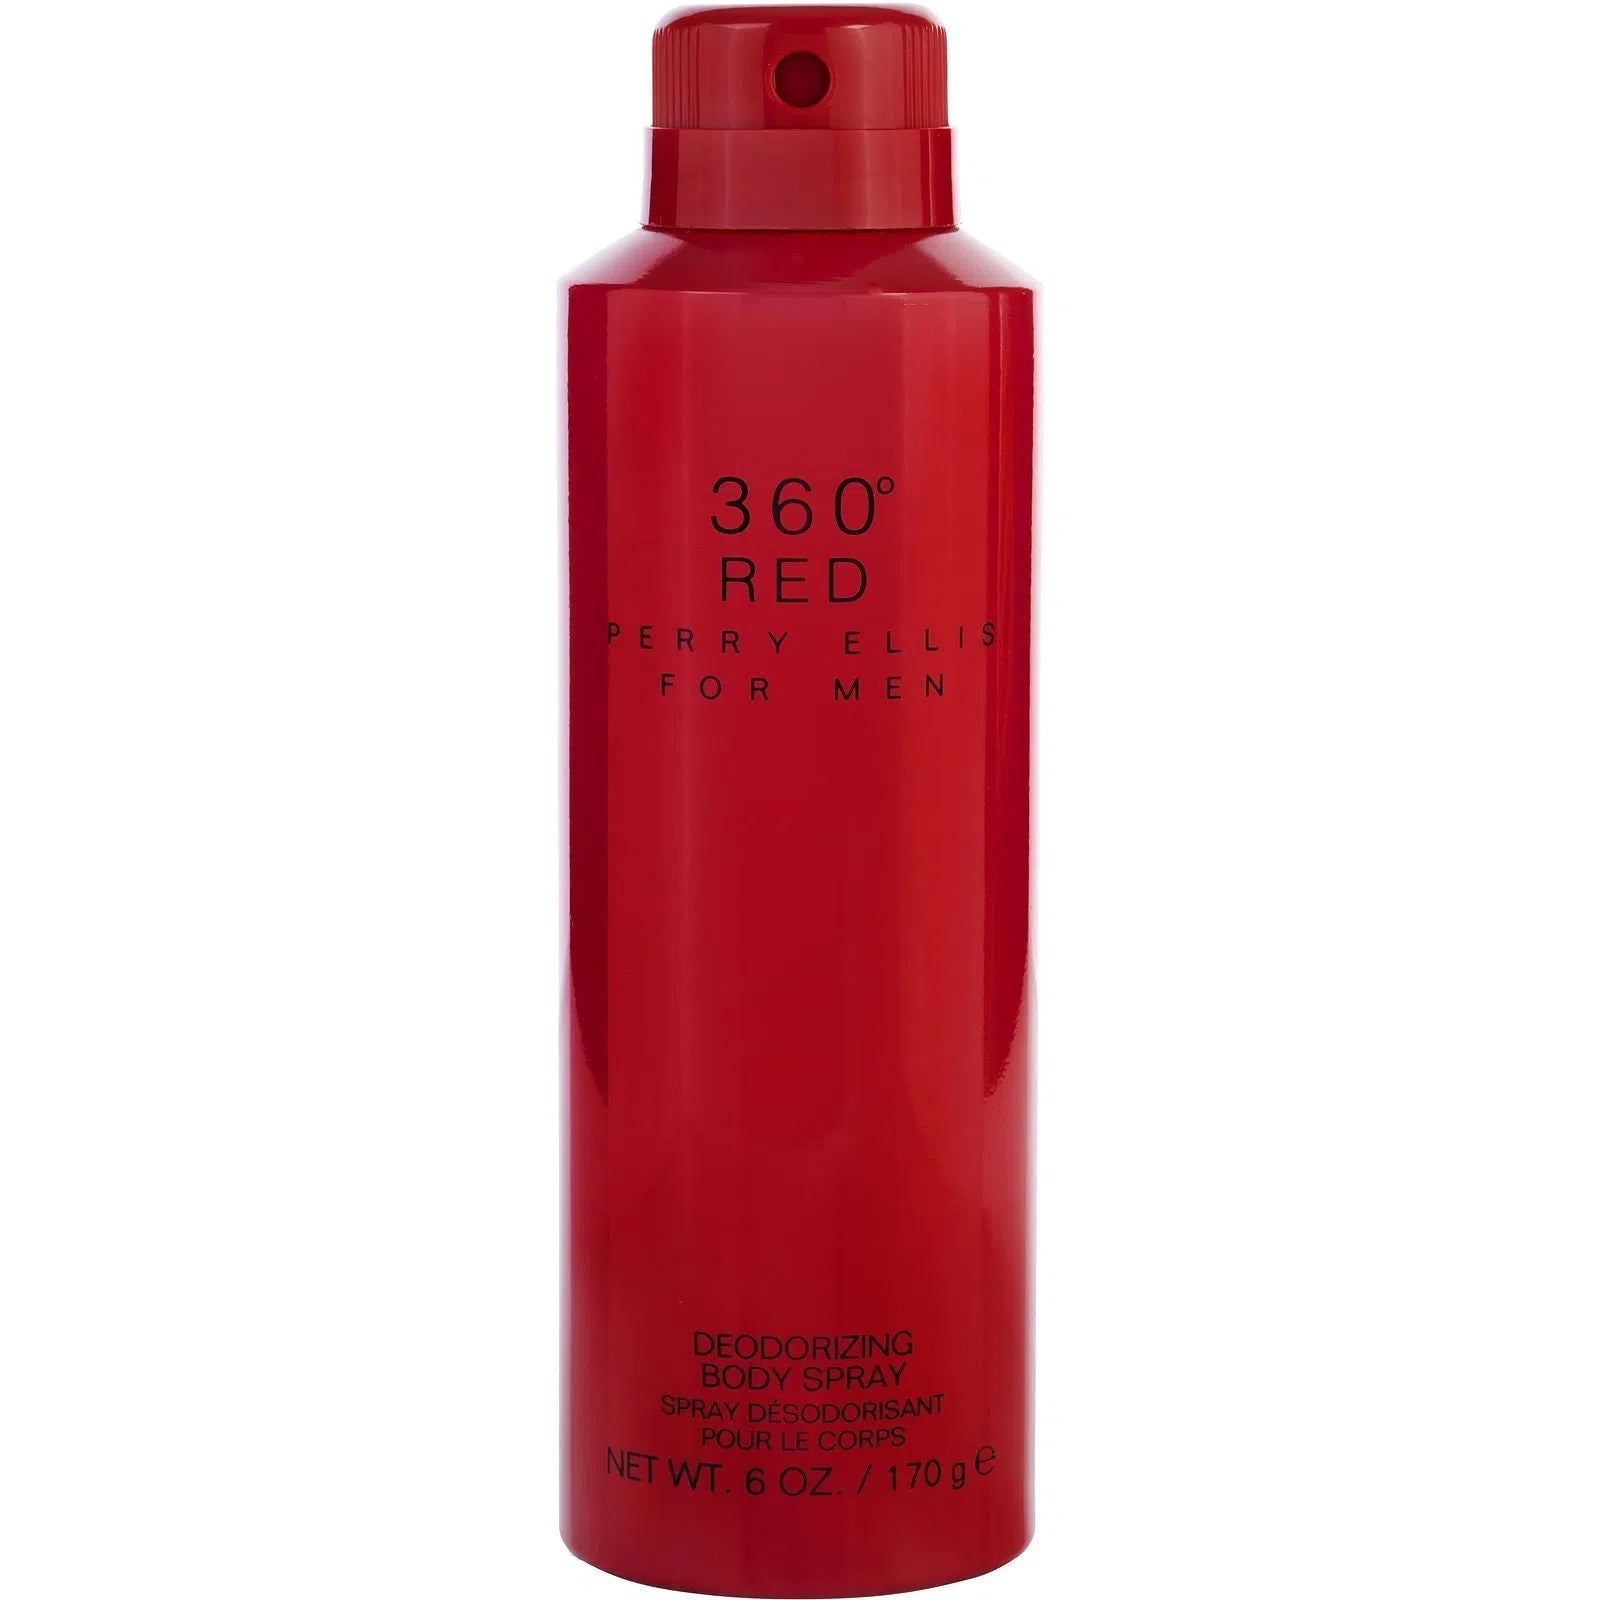 Body Spray Perry Ellis 360 Red Men Body Spray (M) / 170 g - 844061014626- Prive Perfumes Honduras